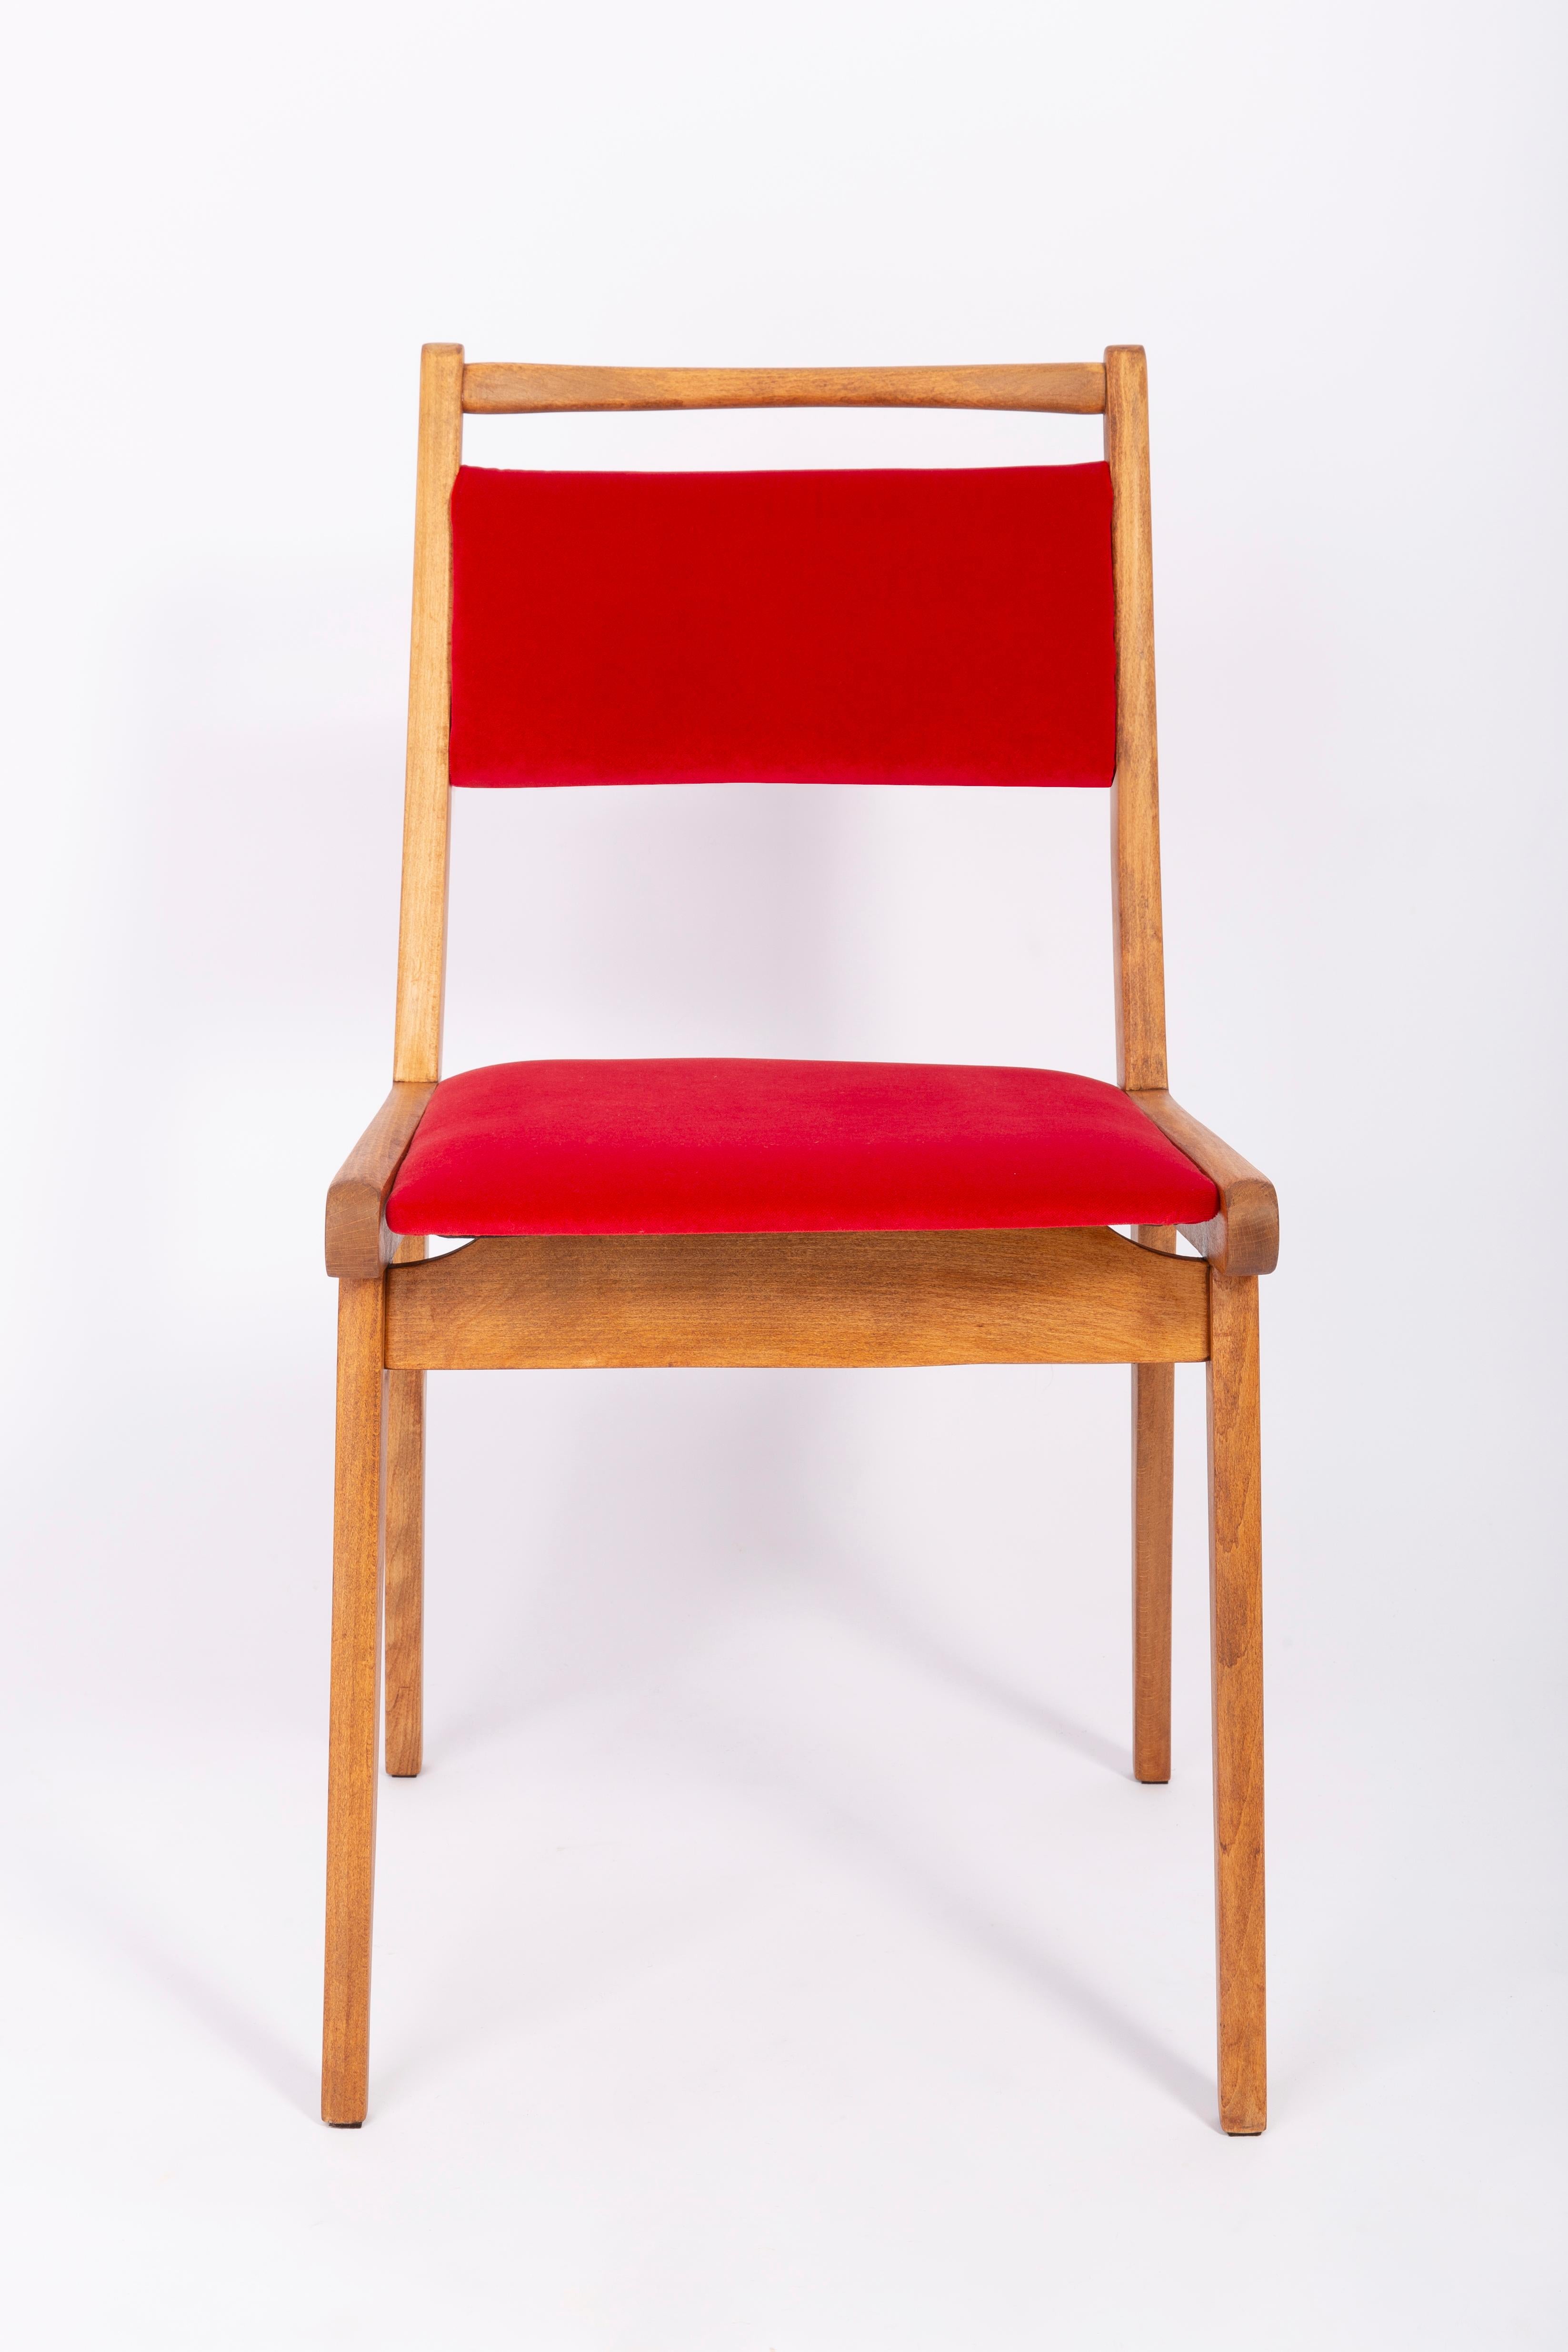 Set of Twelve 20th Century Red Velvet Chairs, by Rajmund Halas, Poland, 1960s For Sale 1